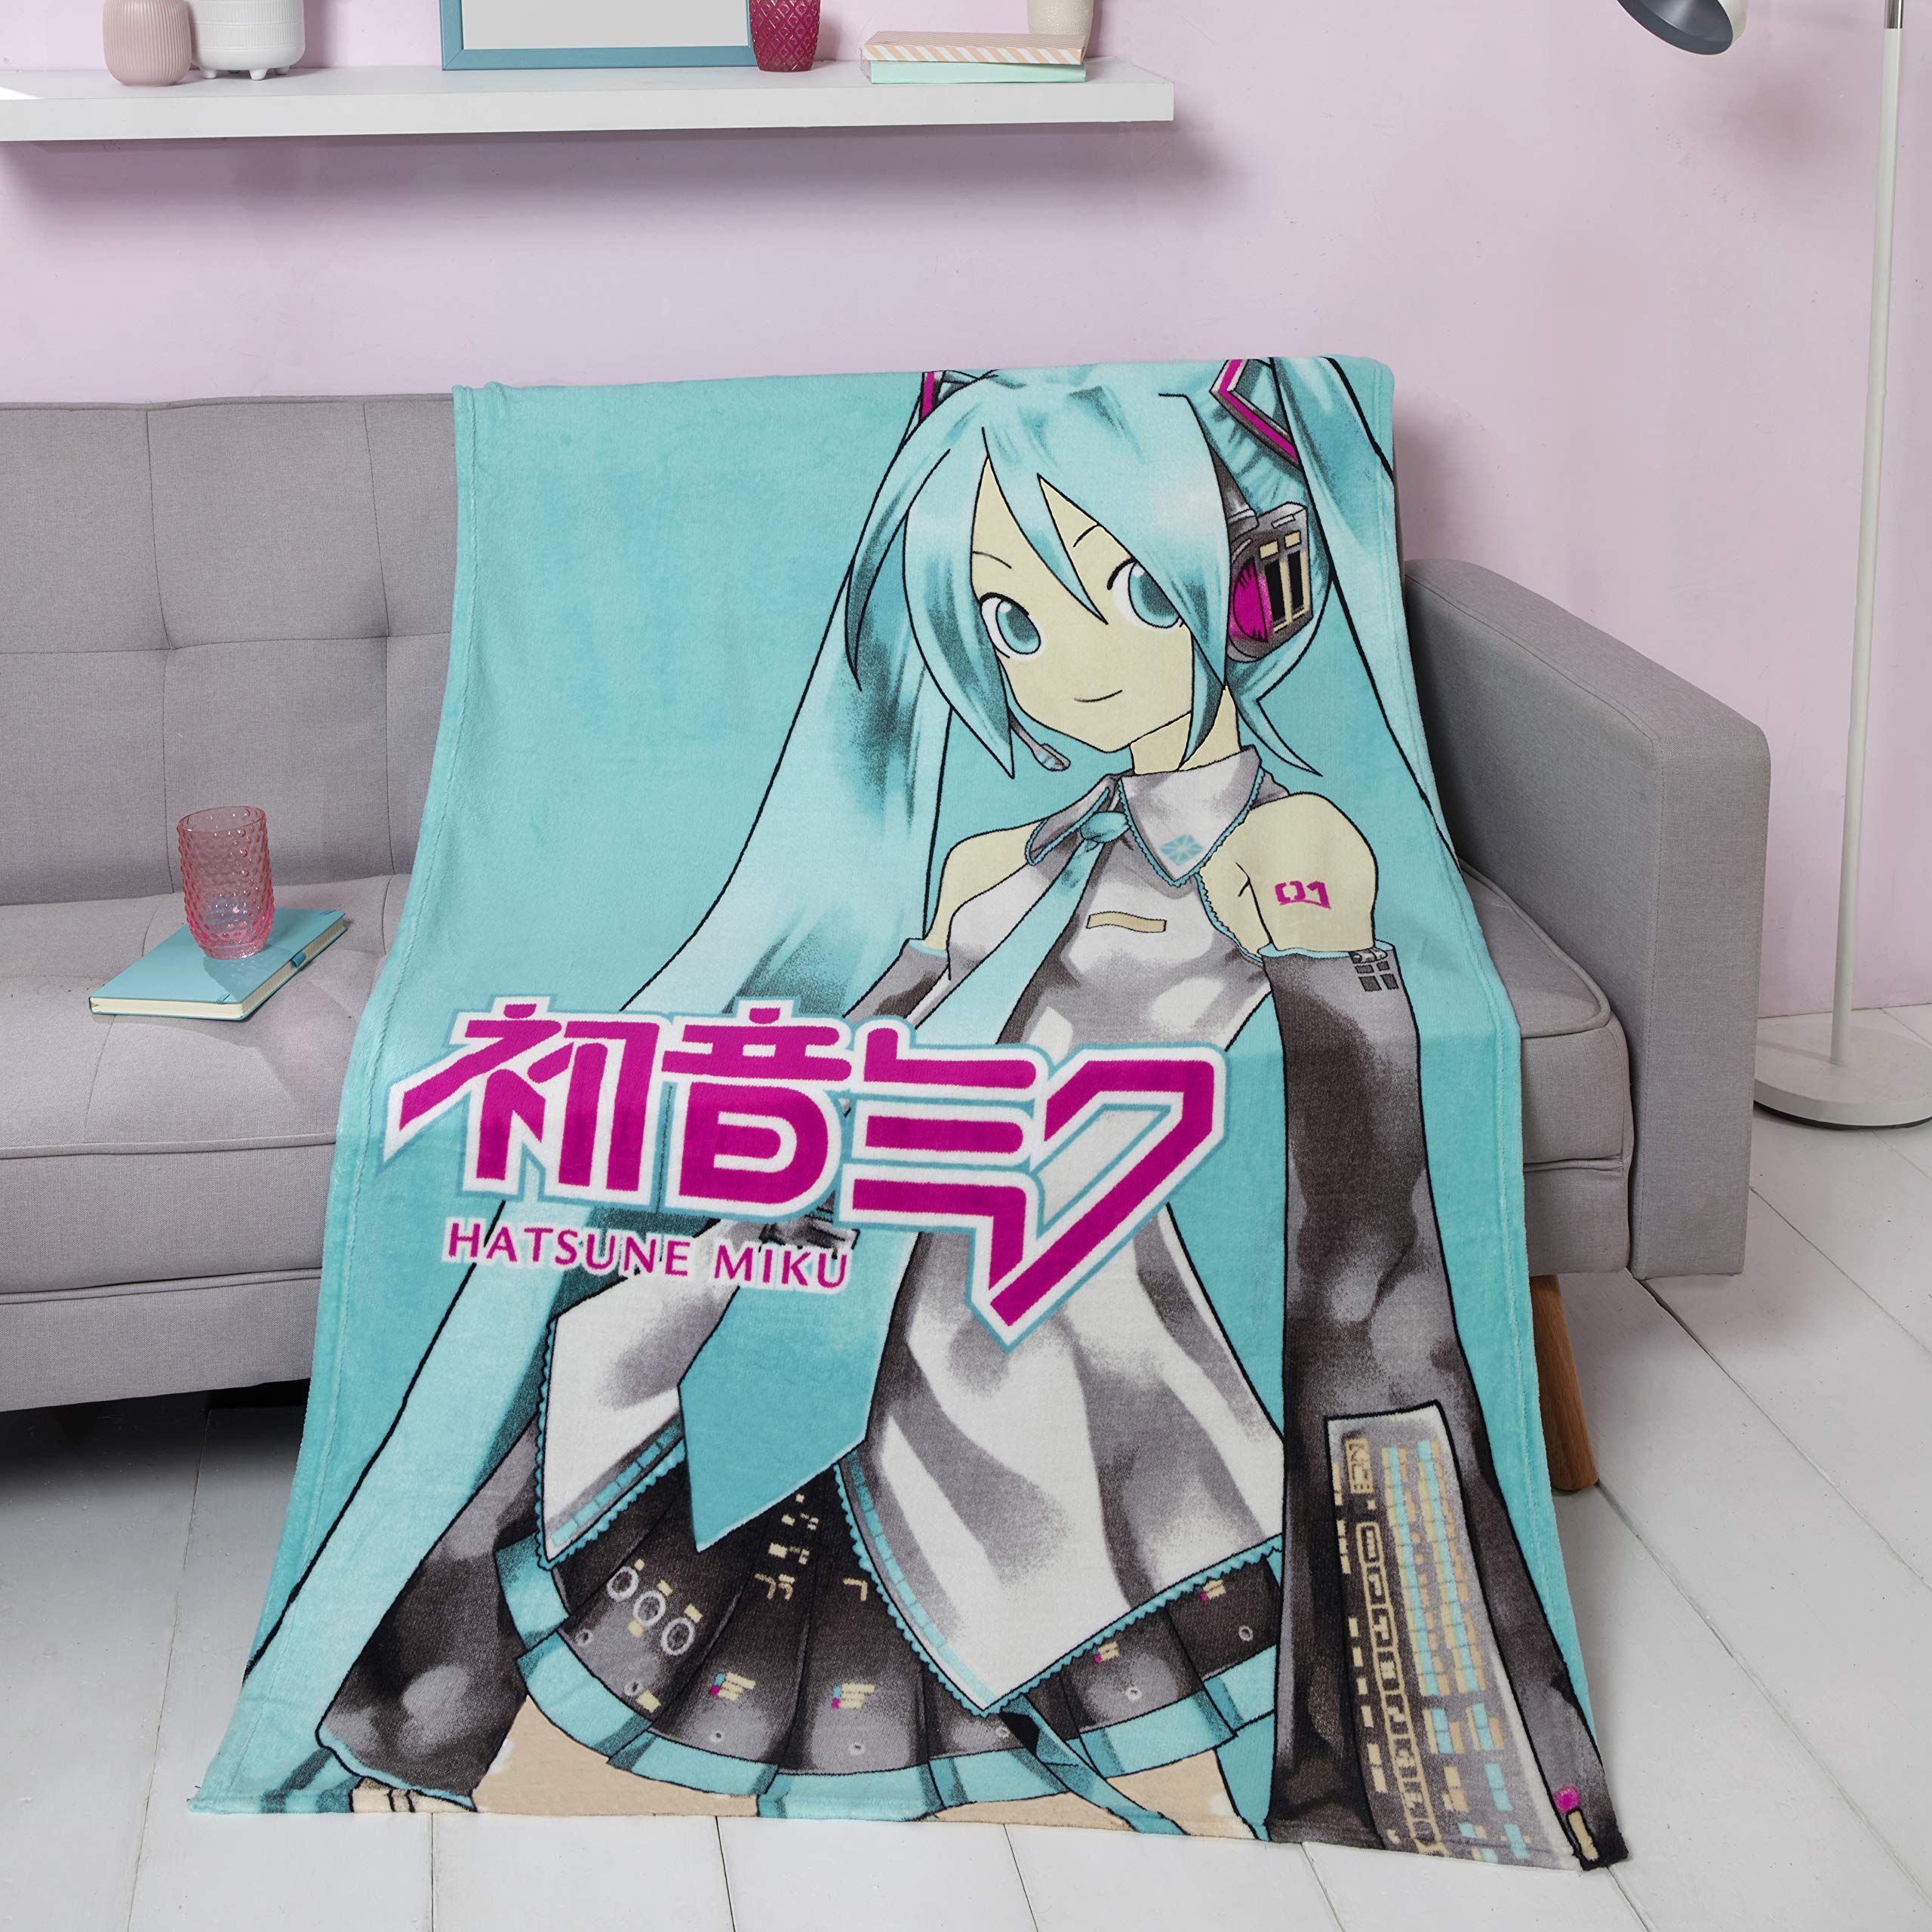 Coco Moon Hatsune Miku Bed Fleece Blanket Throw Bedding Ideal Anime Enthusiastic Bedroom Accessories Gifts Present